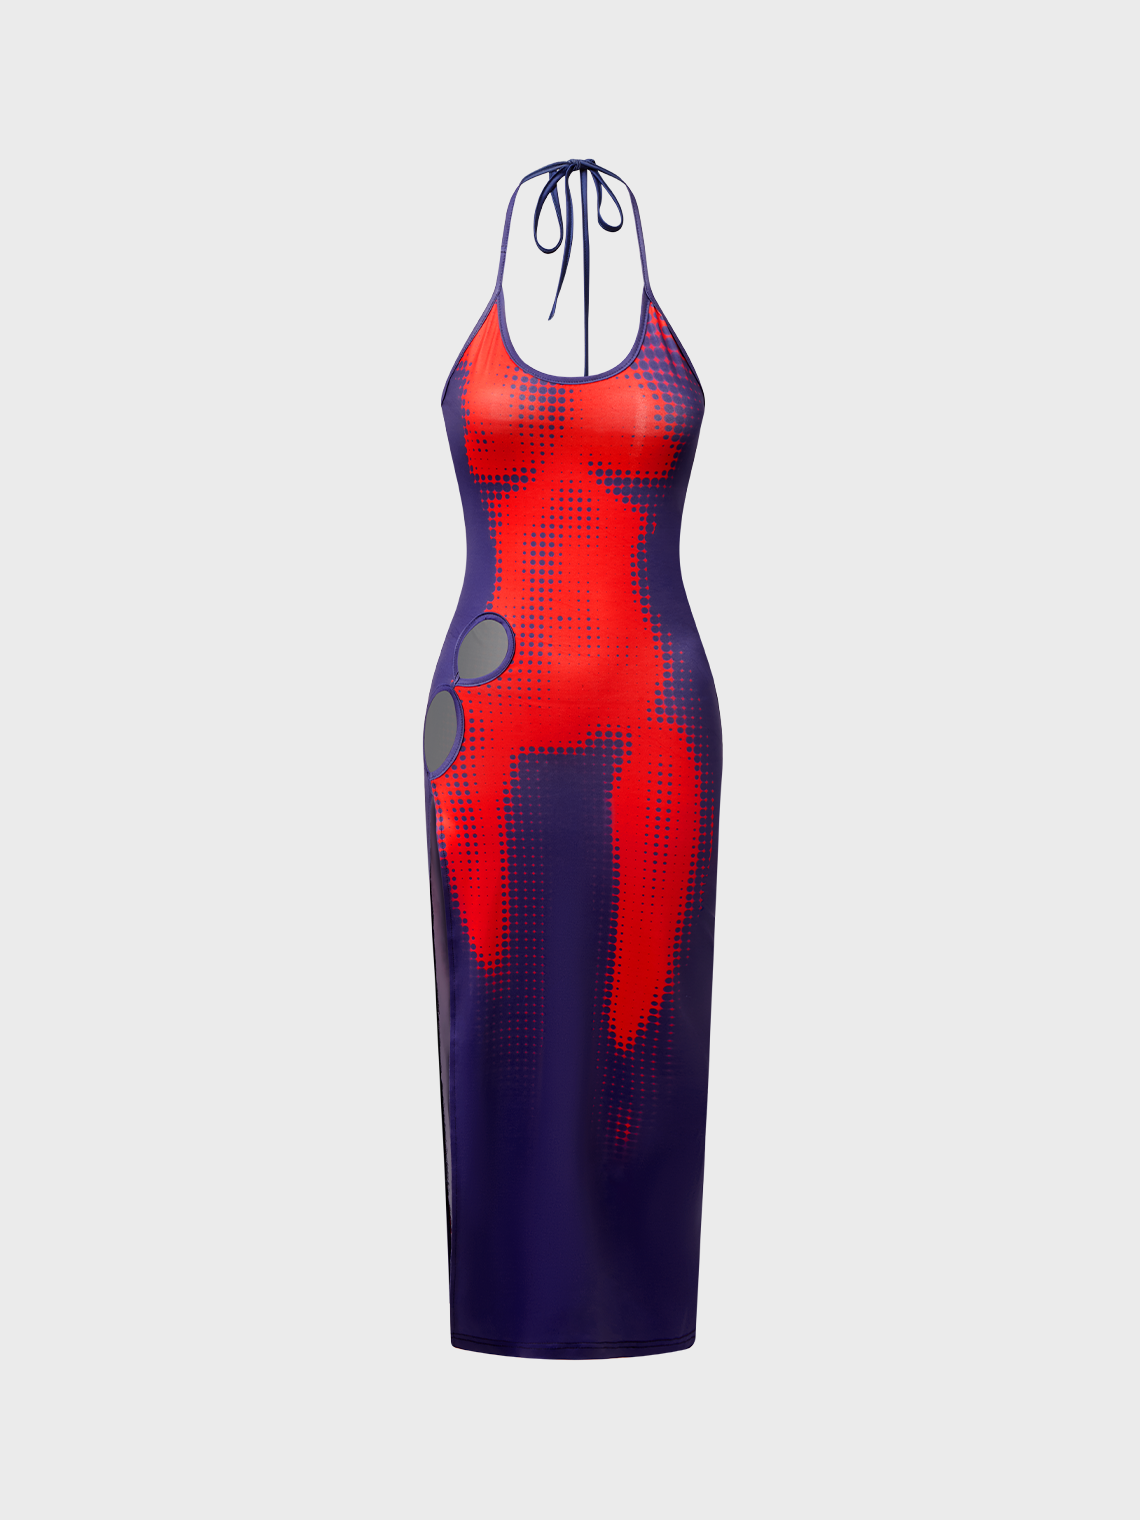 Edgy Red Body Print Asymmetrical Design Out The Body Dress Midi Dress